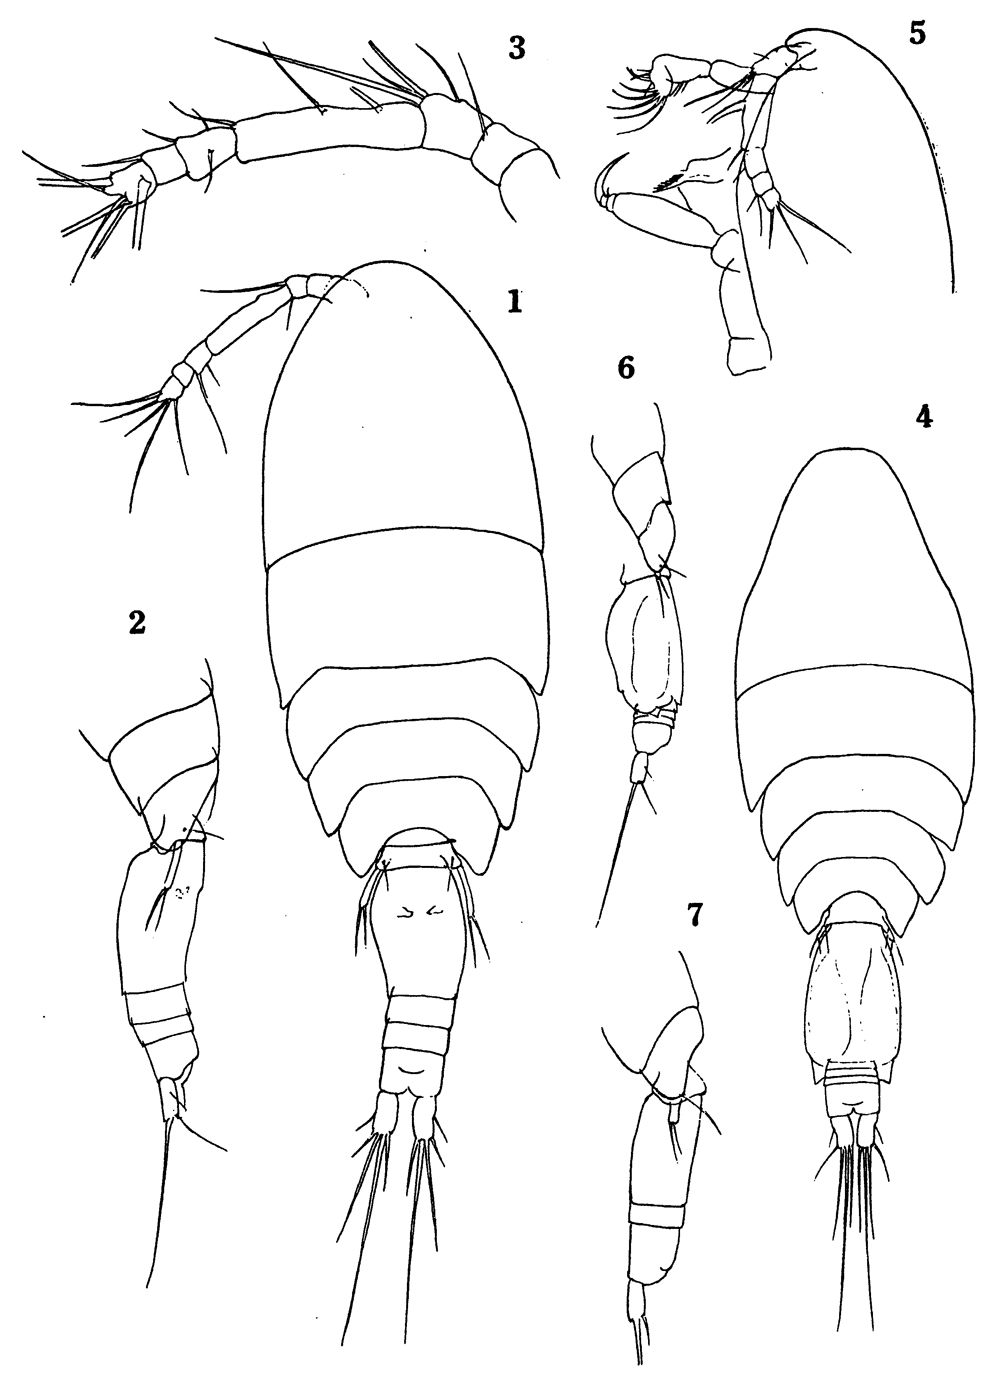 Species Oncaea parila - Plate 7 of morphological figures